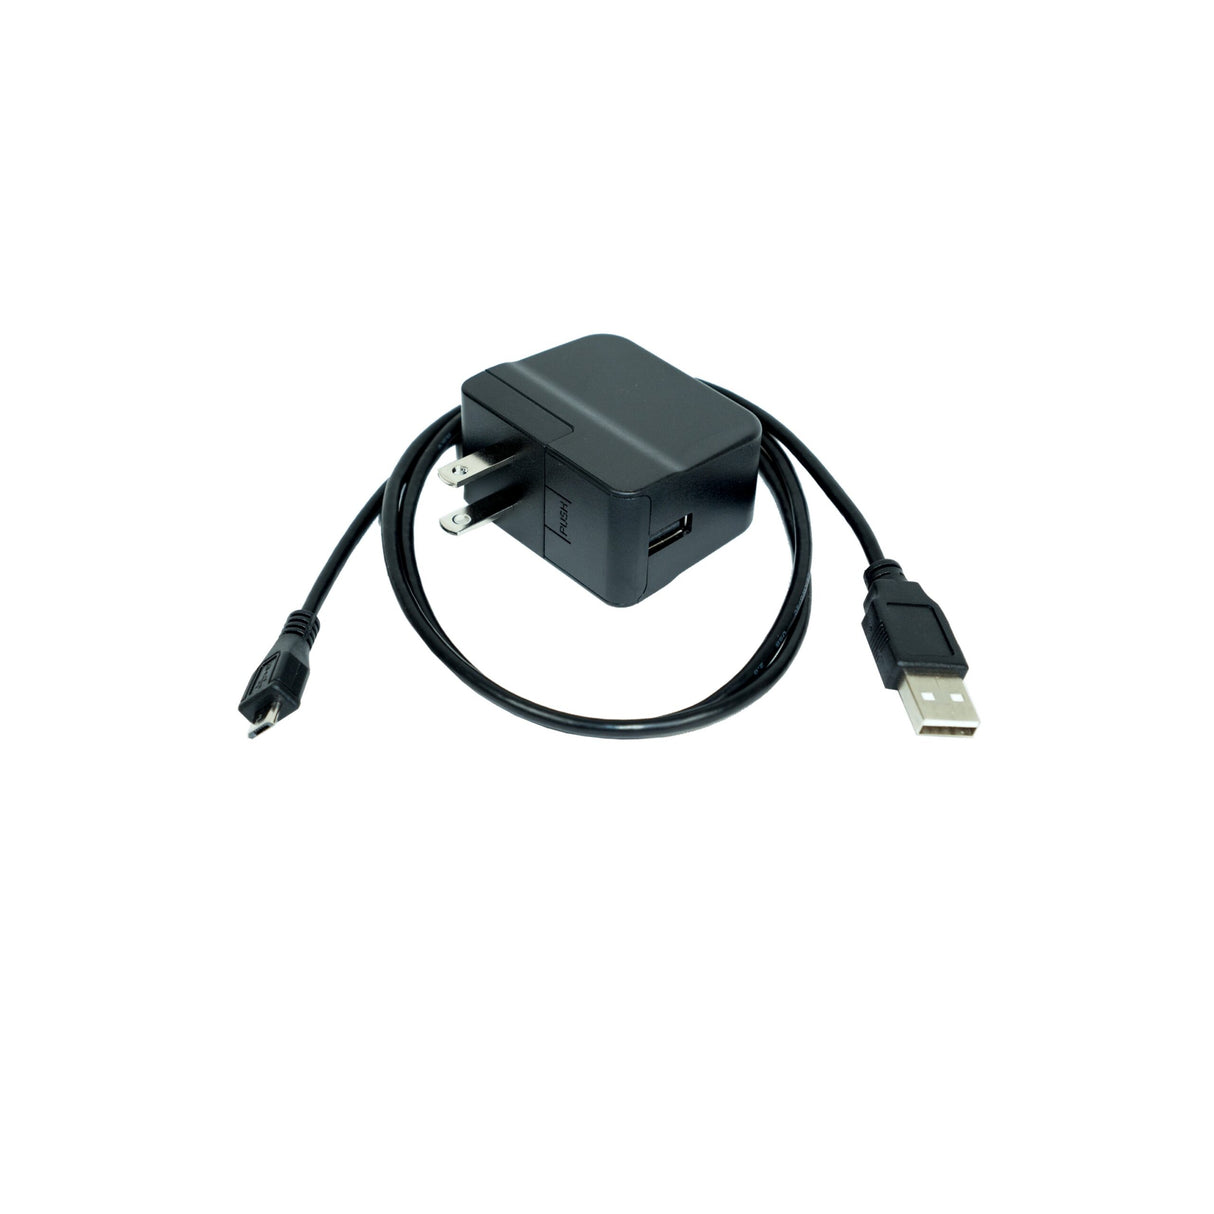 Listen Tech LA-421 Single Port USB to Micro USB Charger